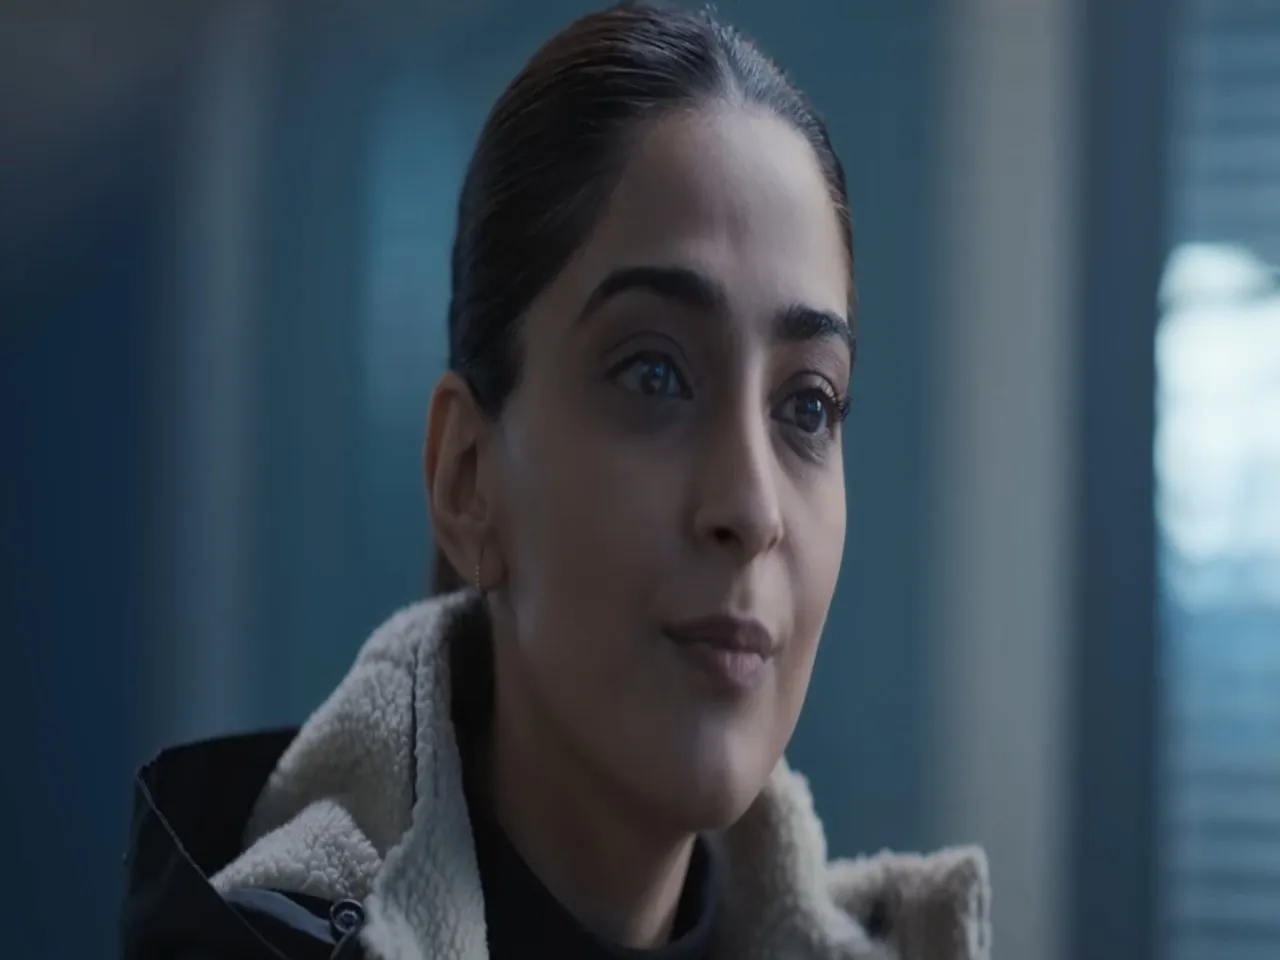 Blind Trailer: Sonam Kapoor Makes Comeback With Intense Thriller